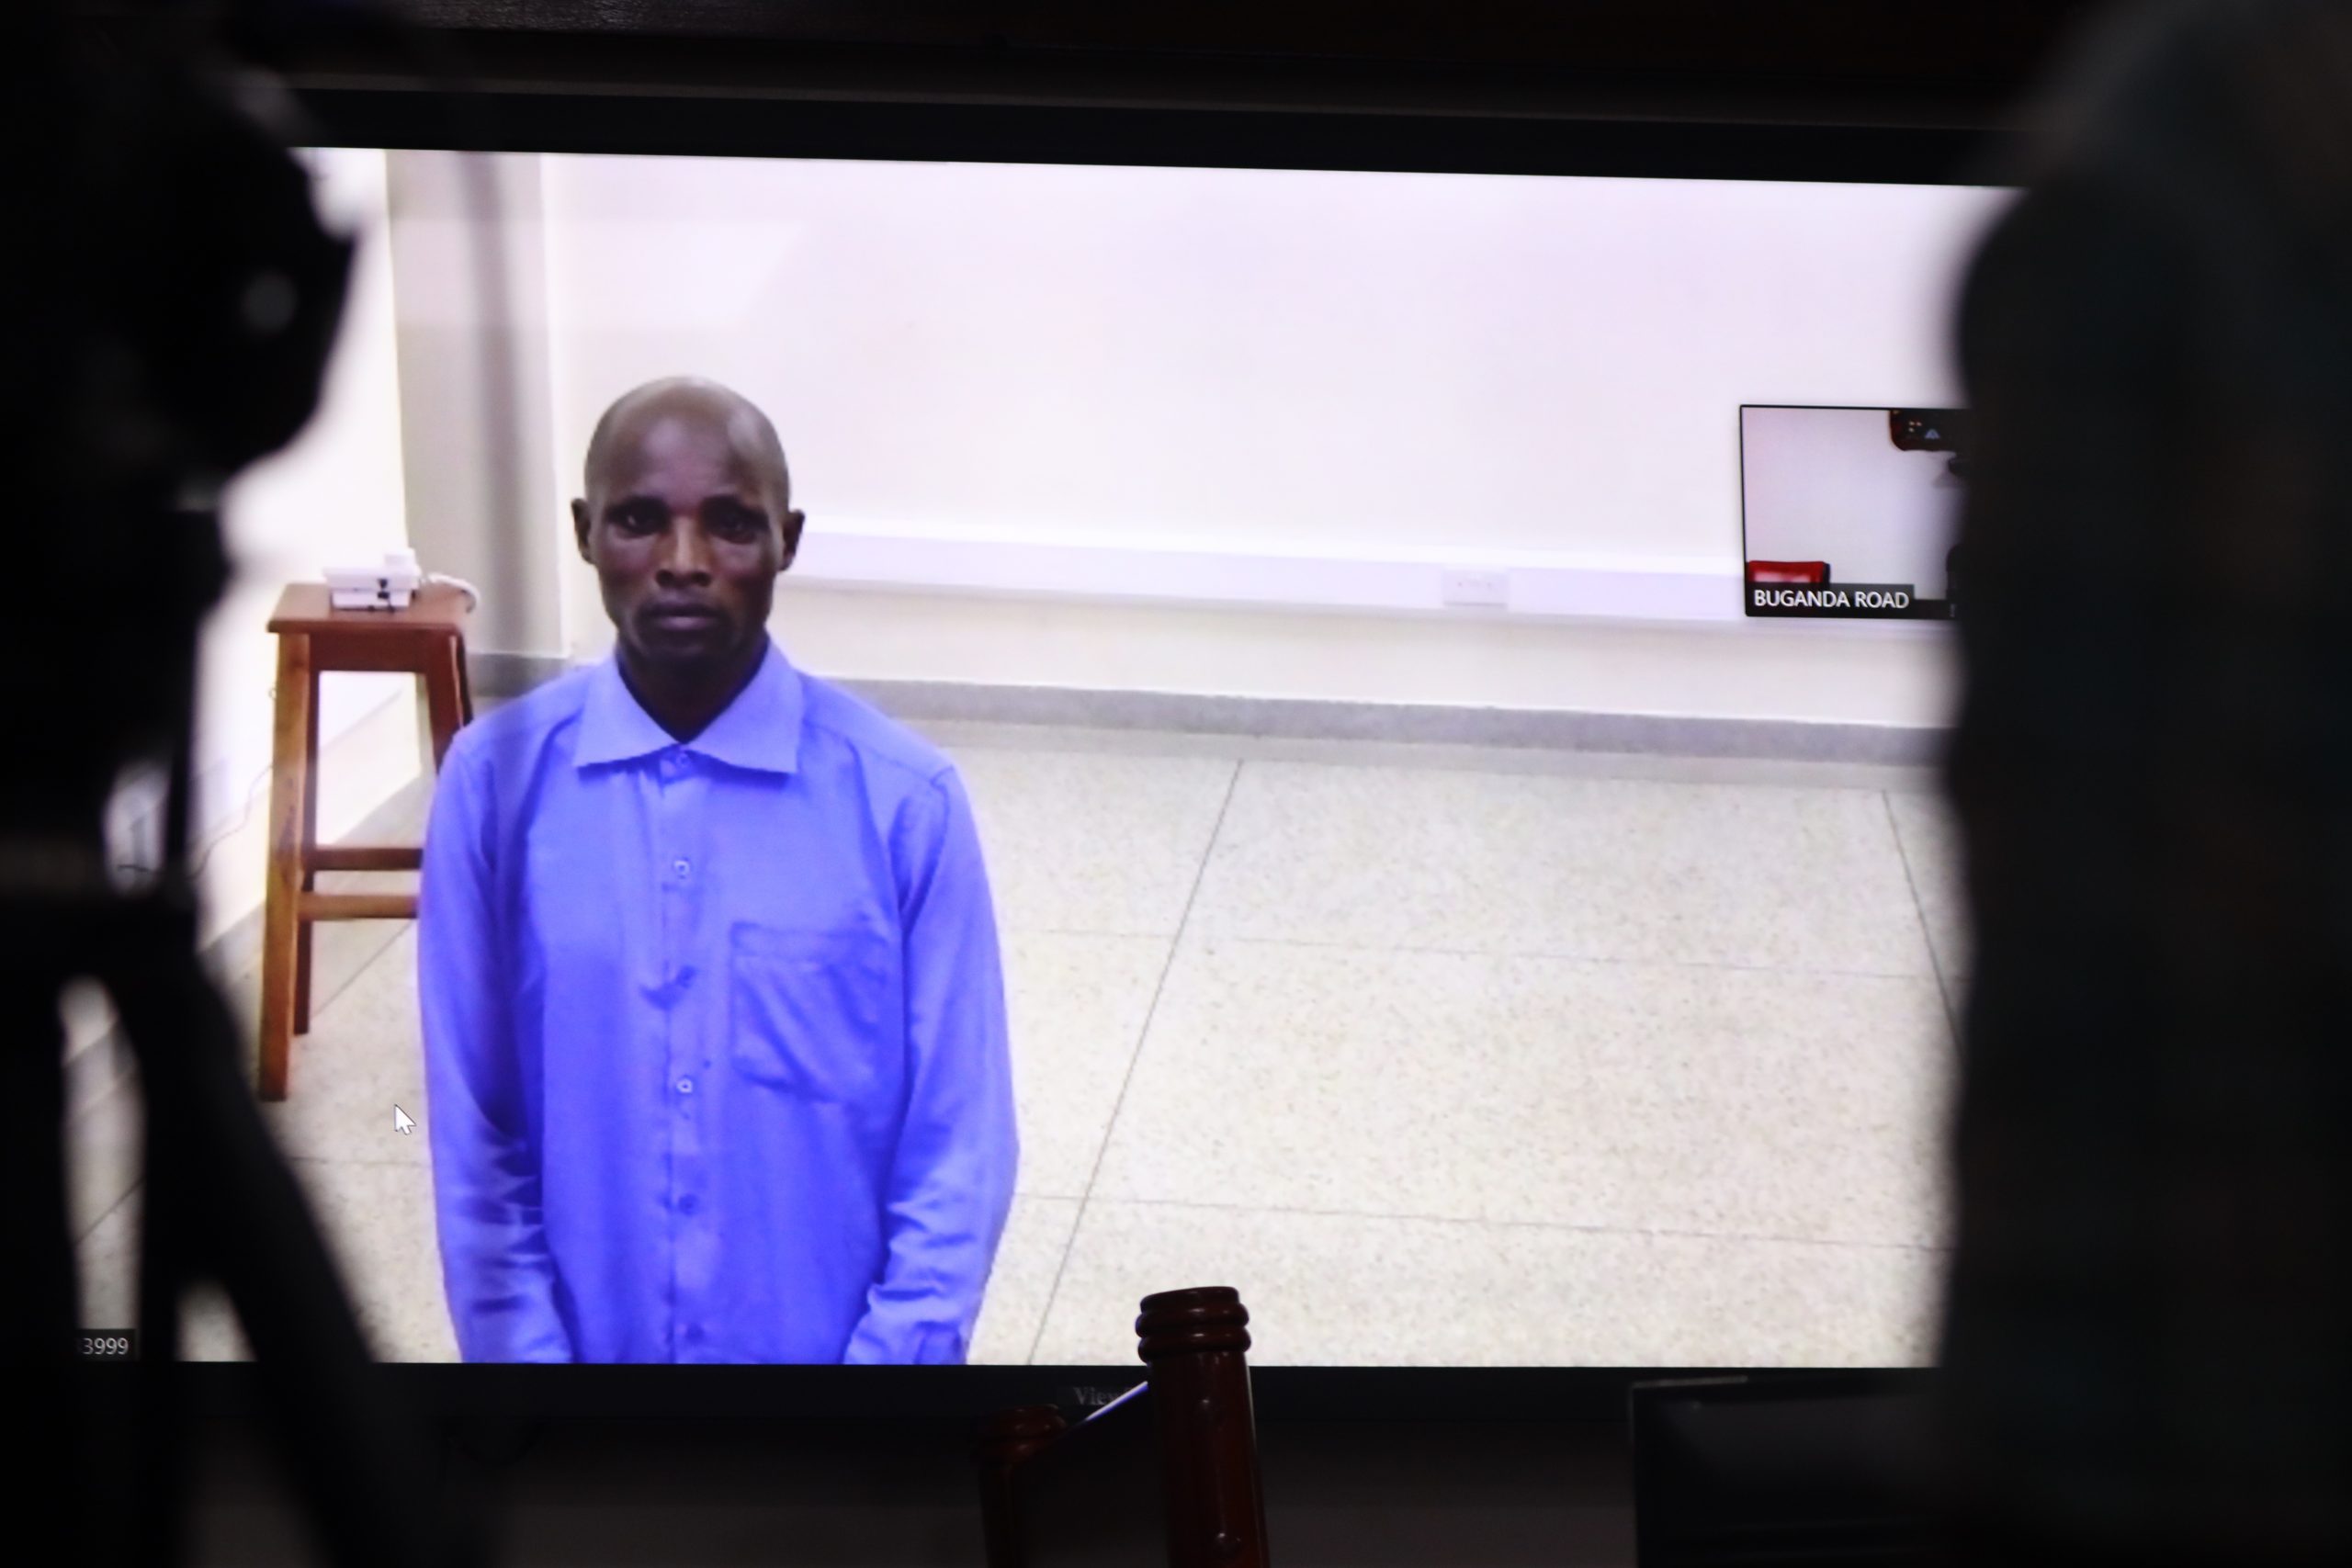 IHK Nurse Killer Sentenced to 17 Years in Jail